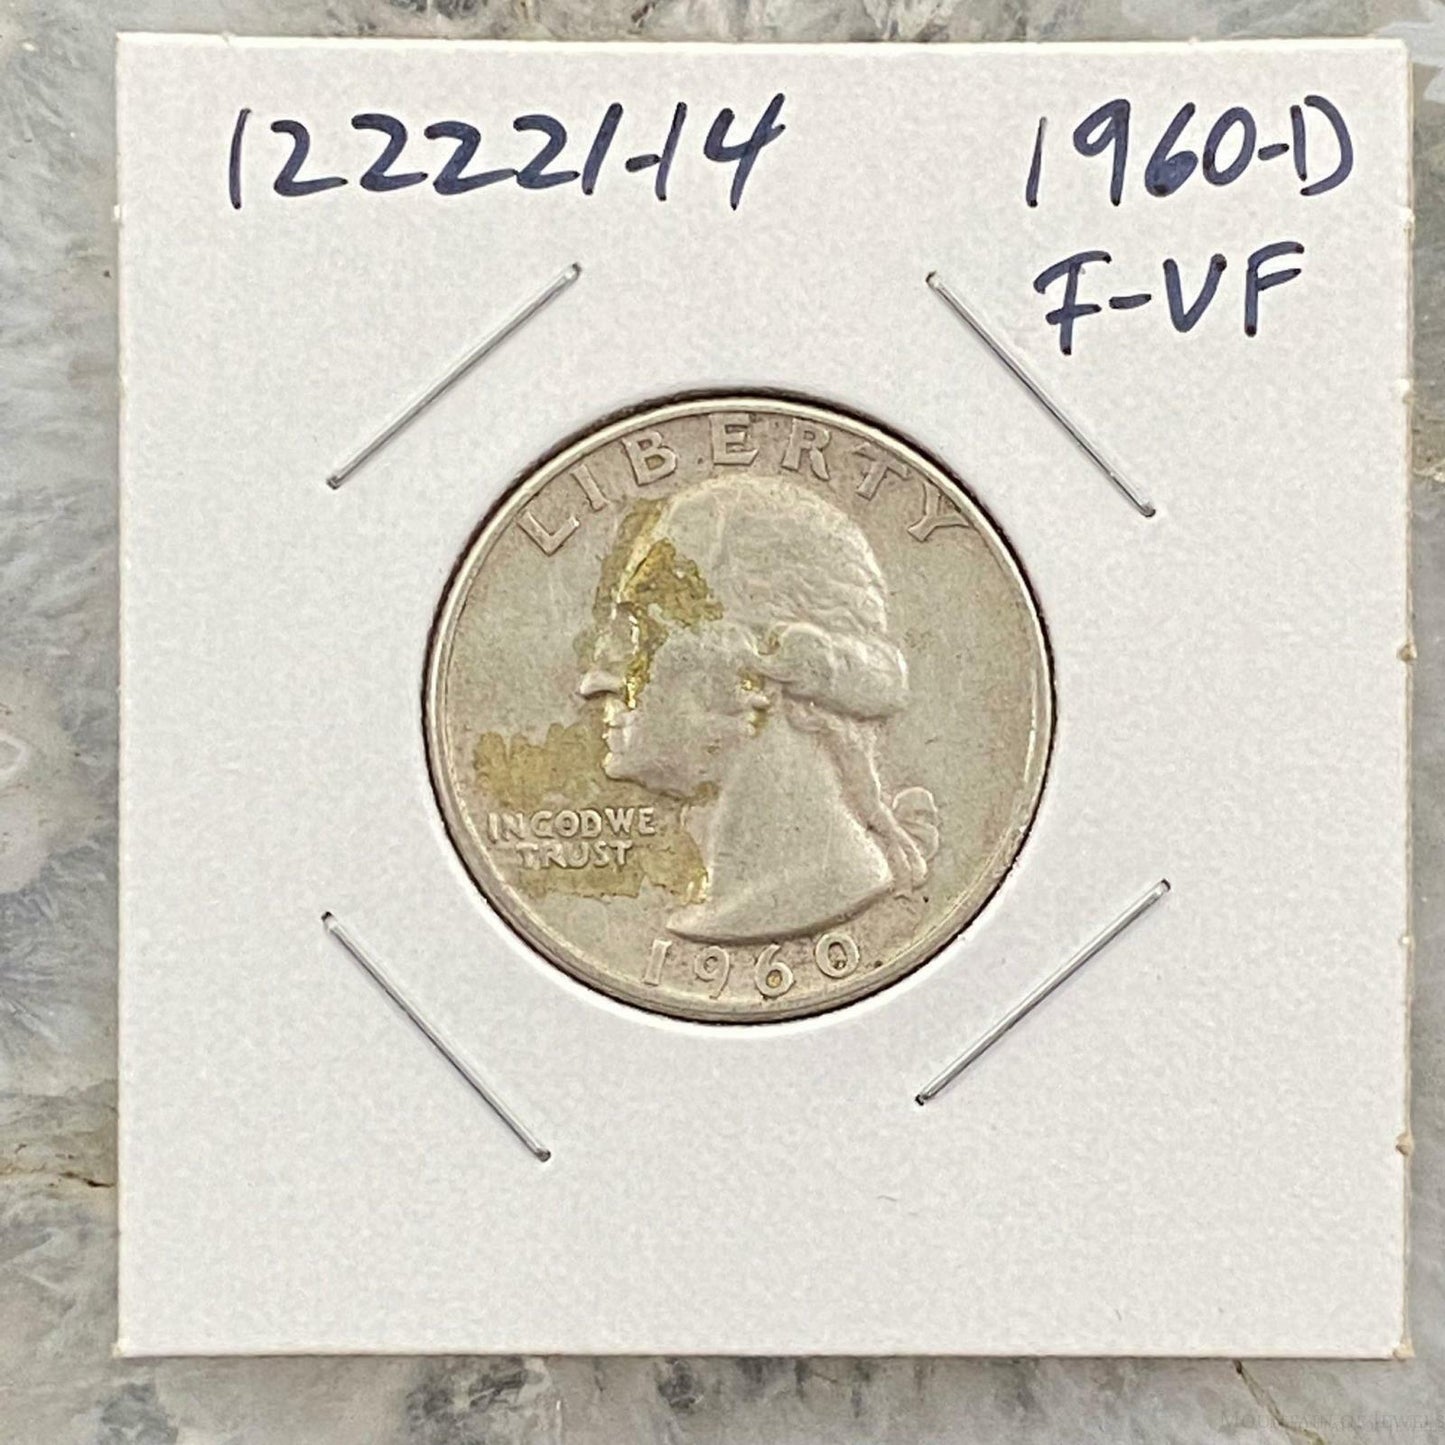 1960-D US Washington Quarter Dollar Coin .900 Silver F-VF #122221-14